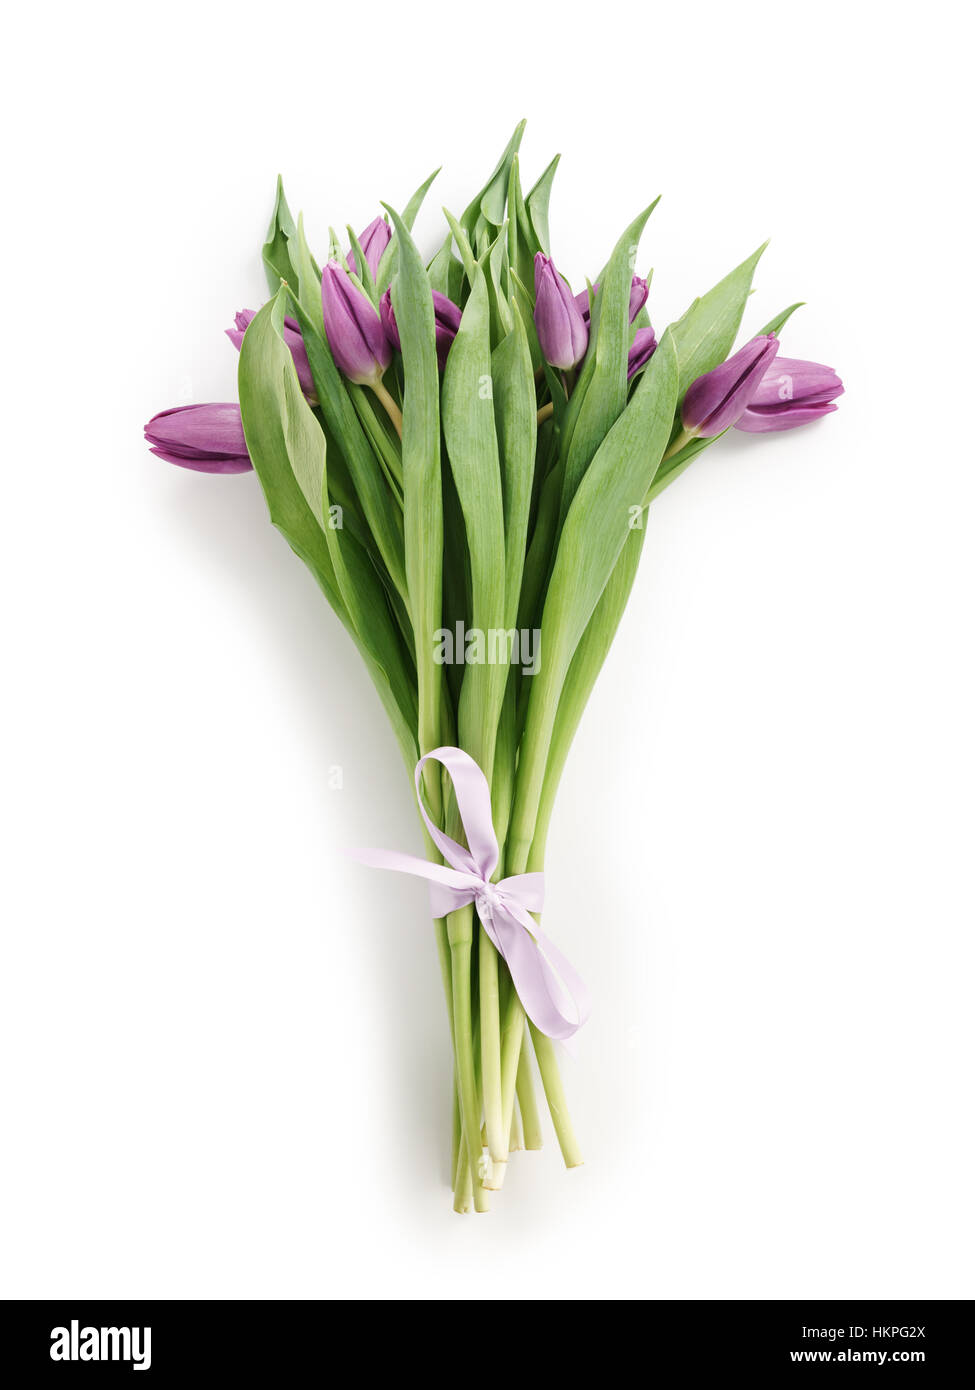 Viola freschi bouquet di tulipani dal di sopra su bianco Foto Stock